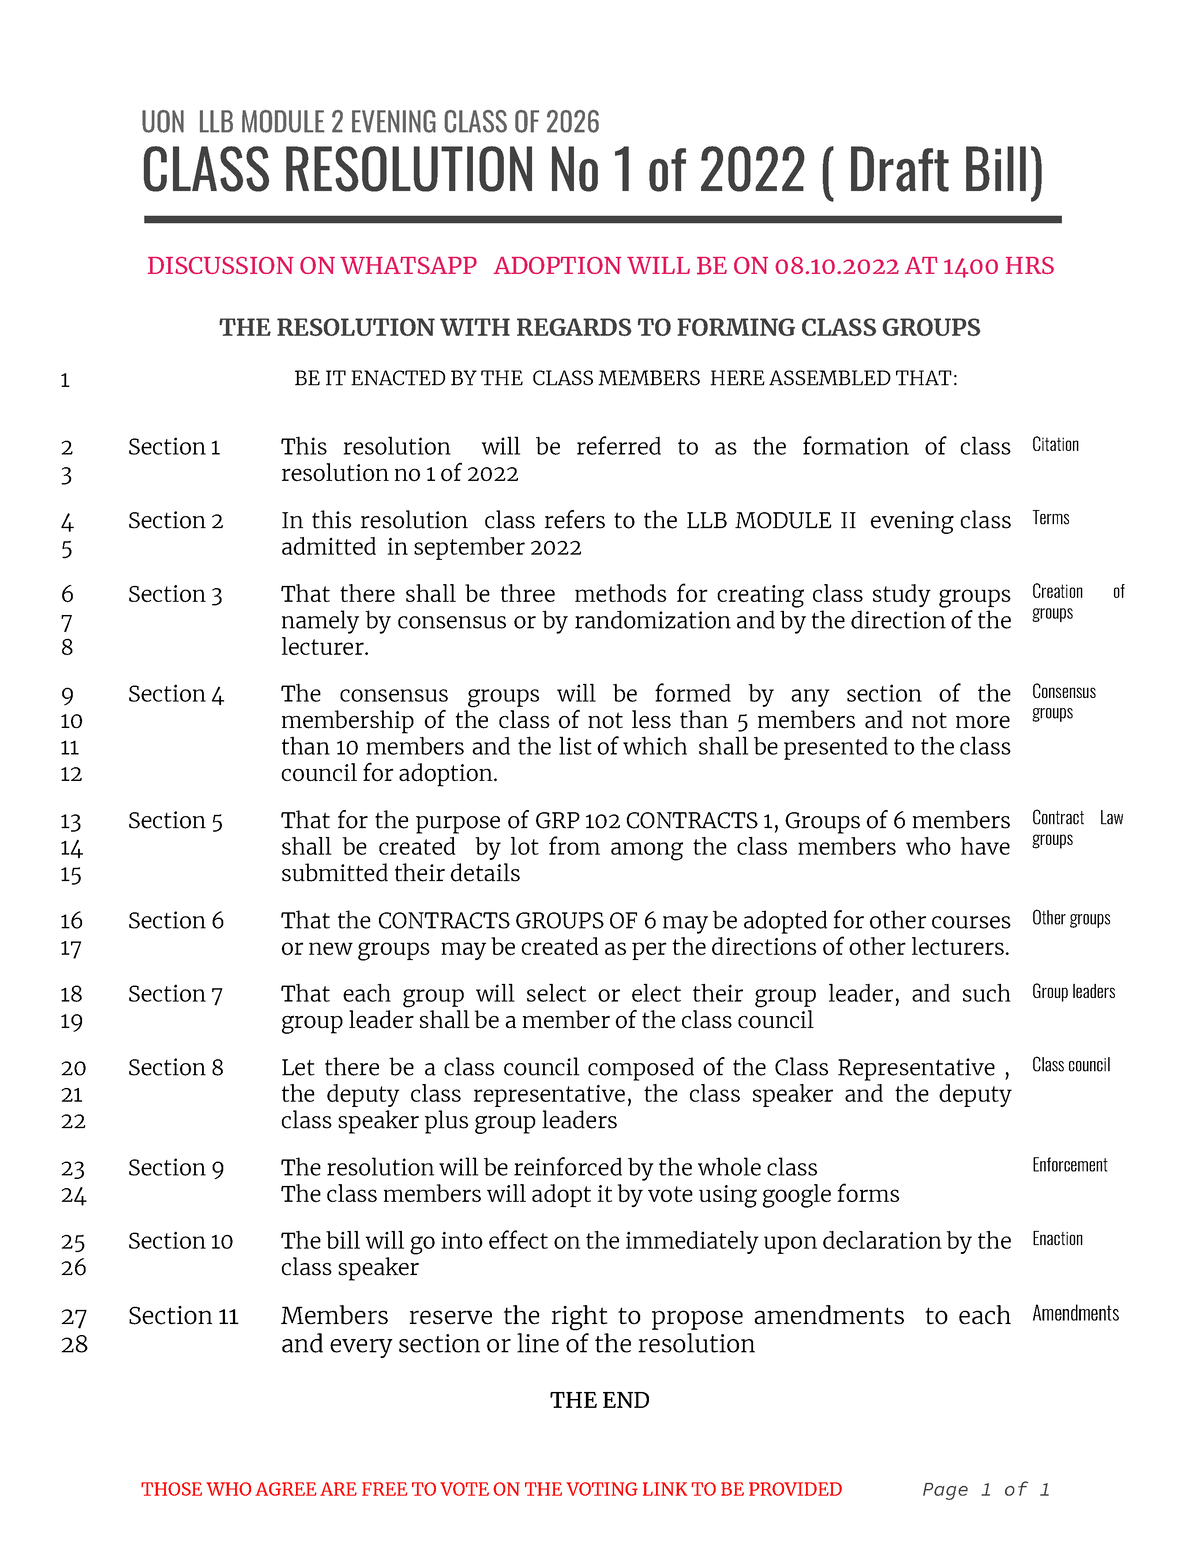 Class Resolution No 1 of 2022 Draft Bill Google Docs UON LLB MODULE